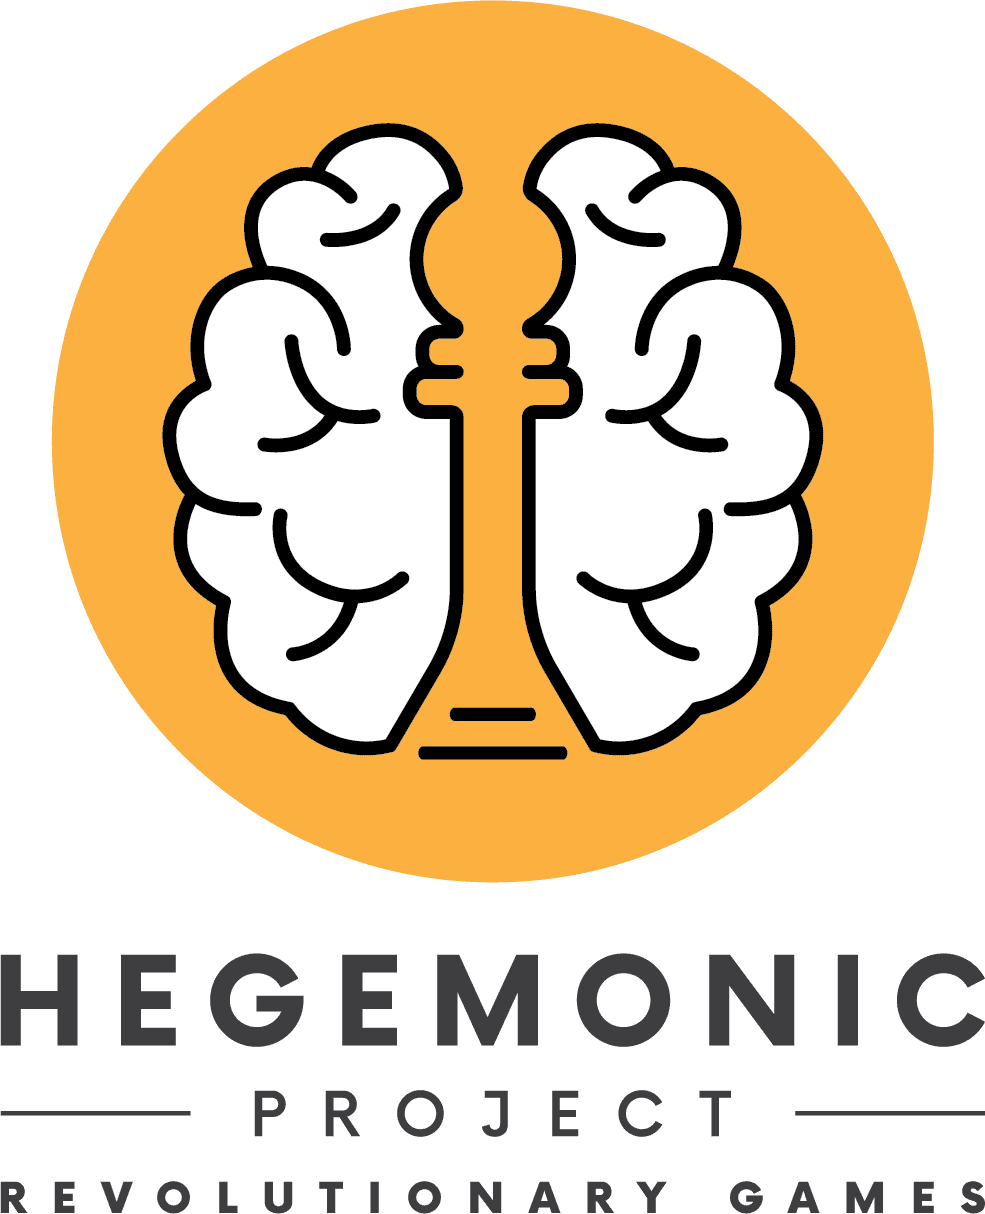 Brand: Hegemonic Project Limited